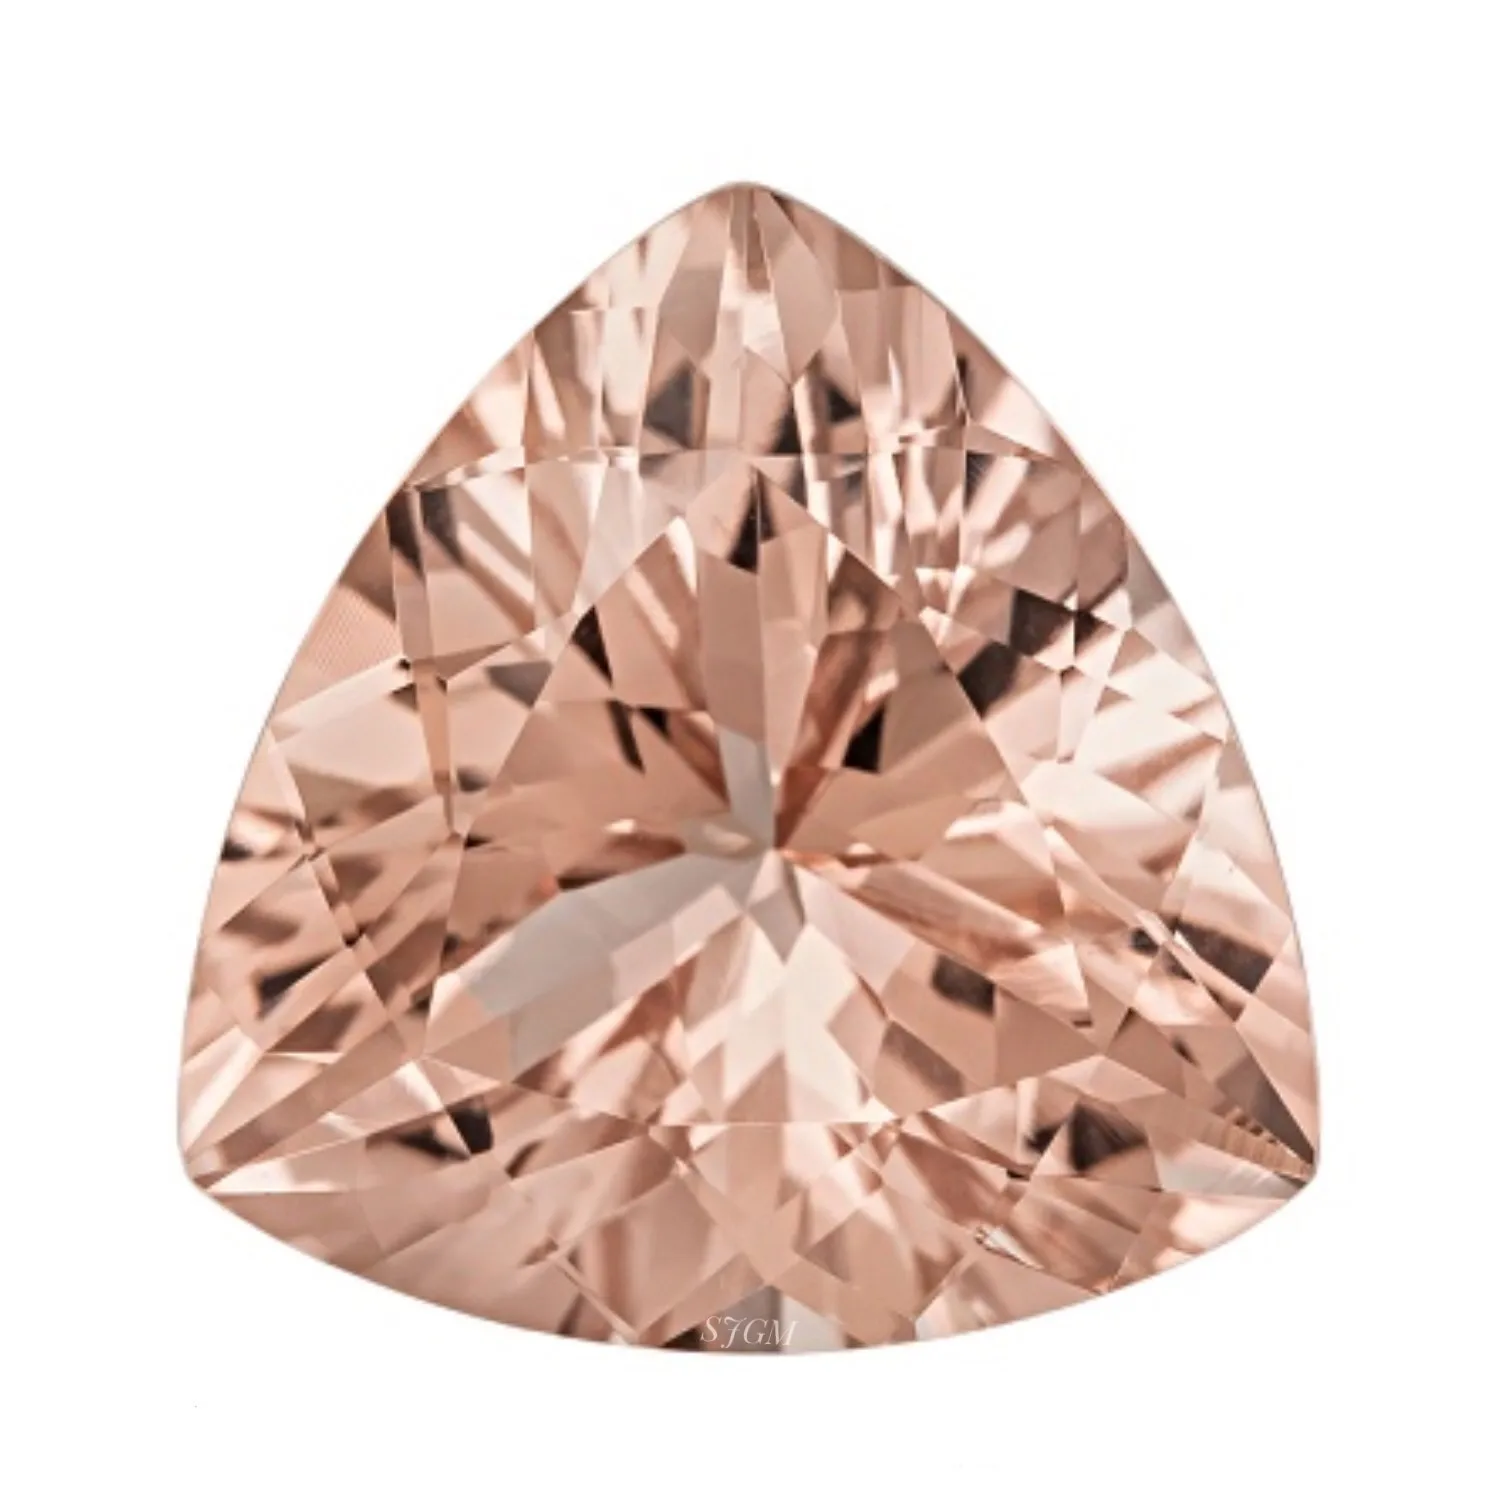 Natural Peach Morganite Trillion Cut 4mm to 12mm Top Quality Loose Gemstone 